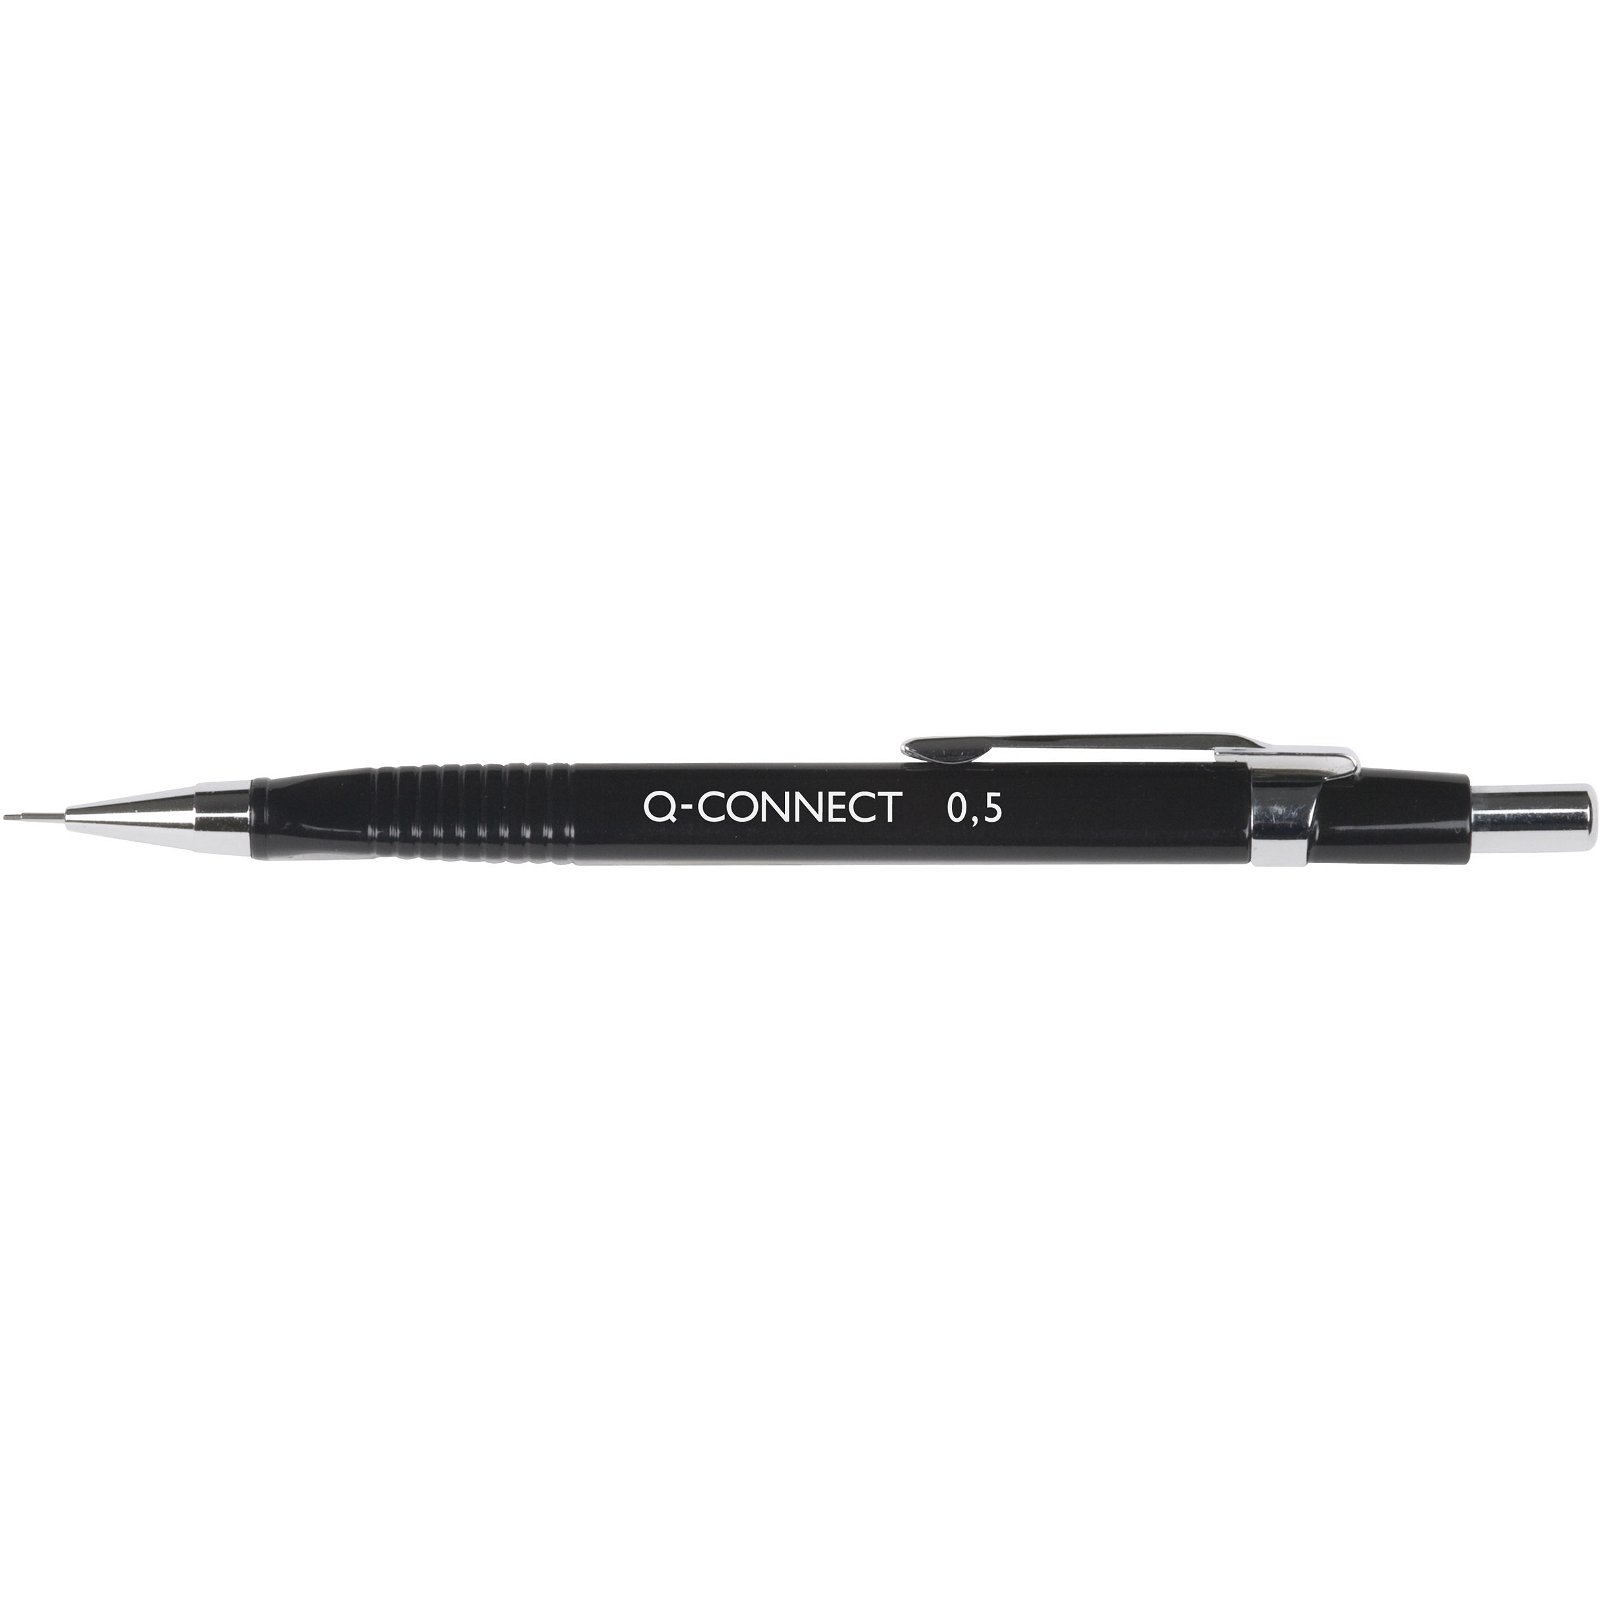 Q-connect automatic pencil gra;sort 0,5 mm